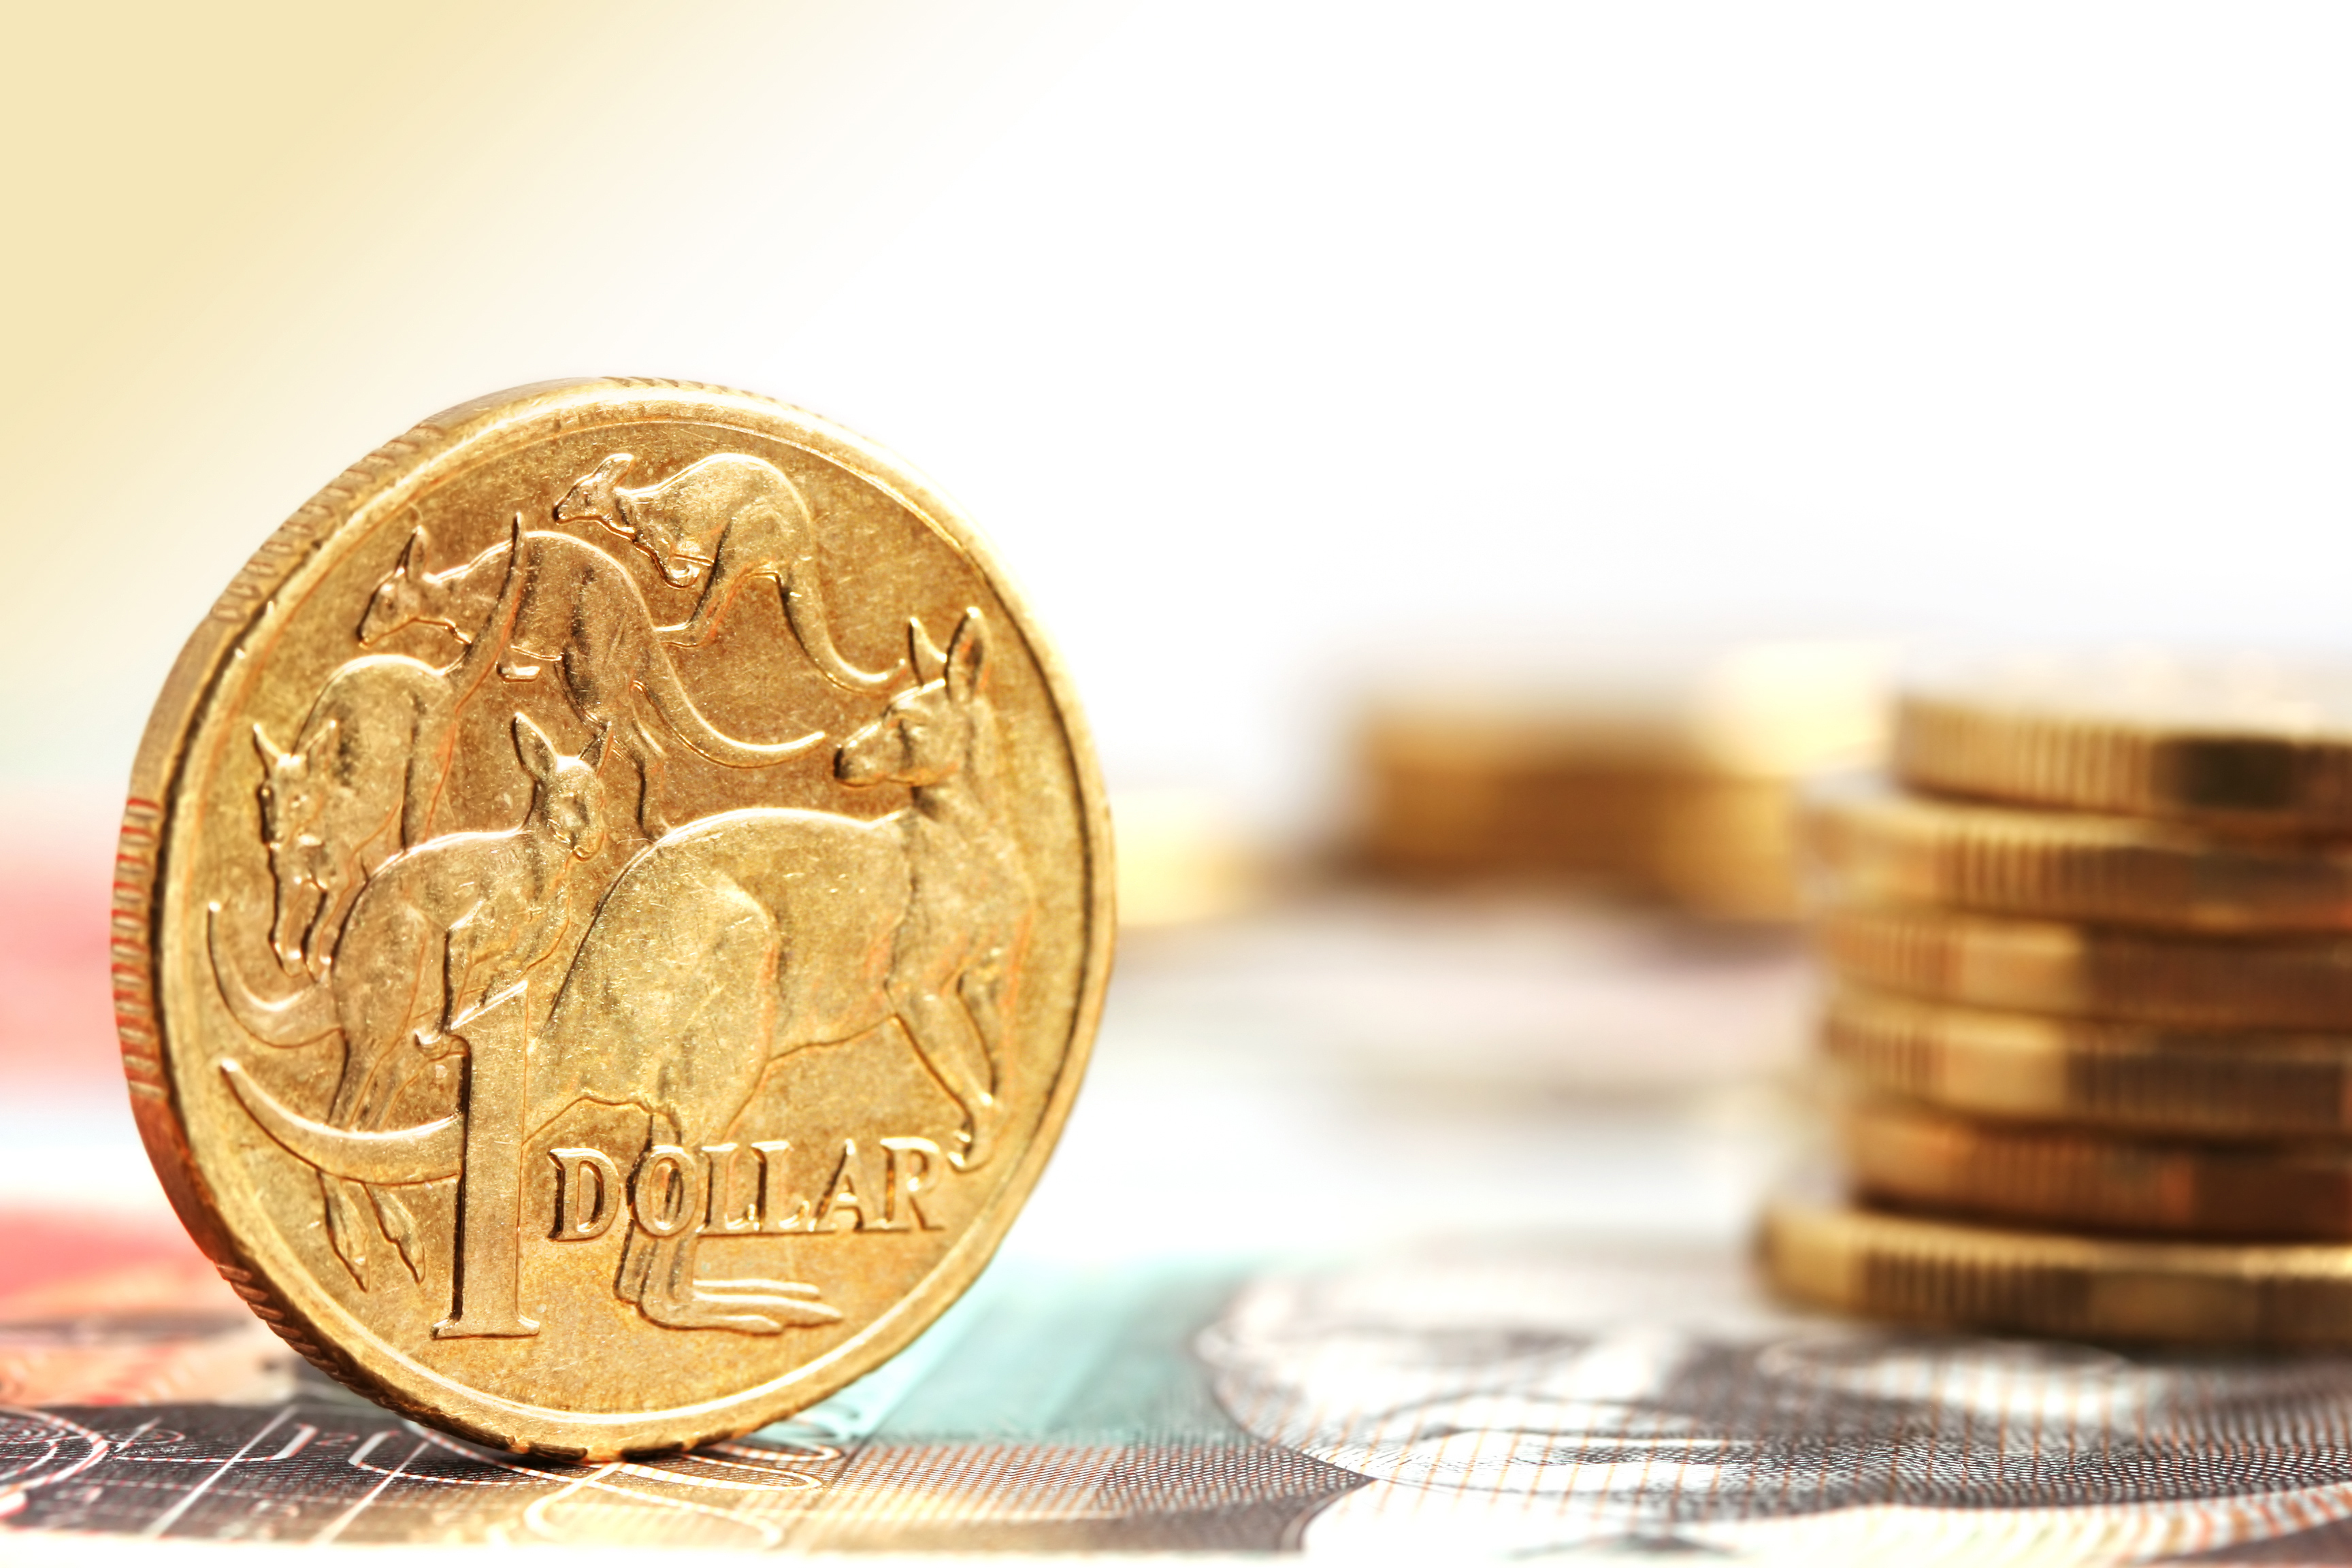 Aussie dollar's plunge sparks inflation fears